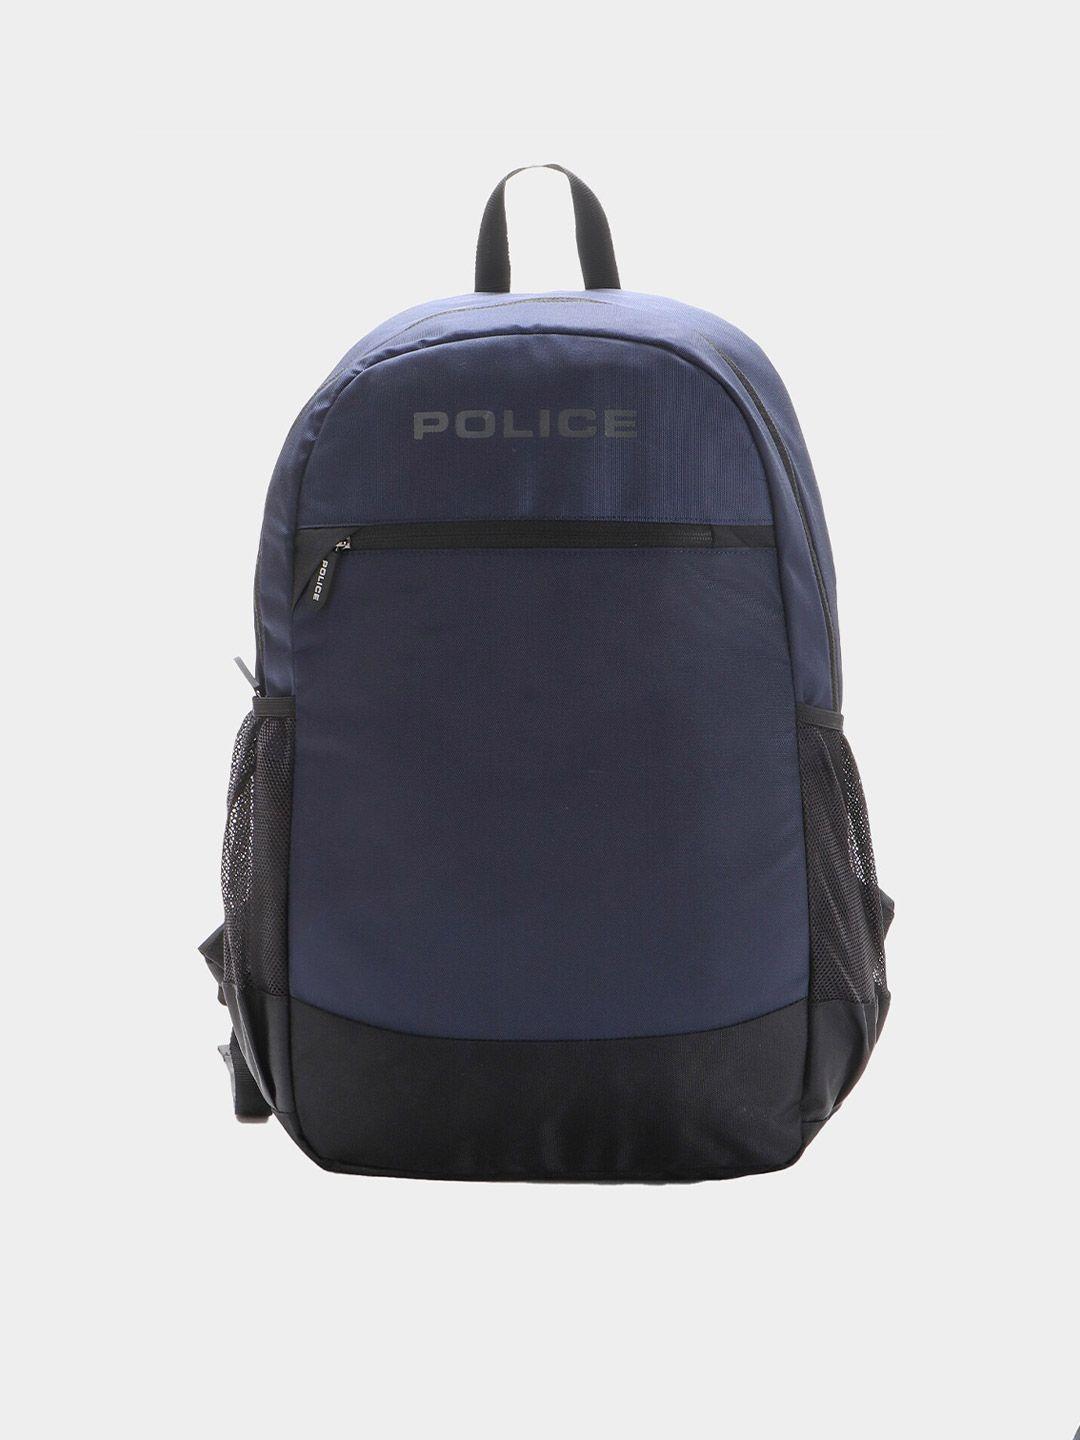 police light weight medium backpack